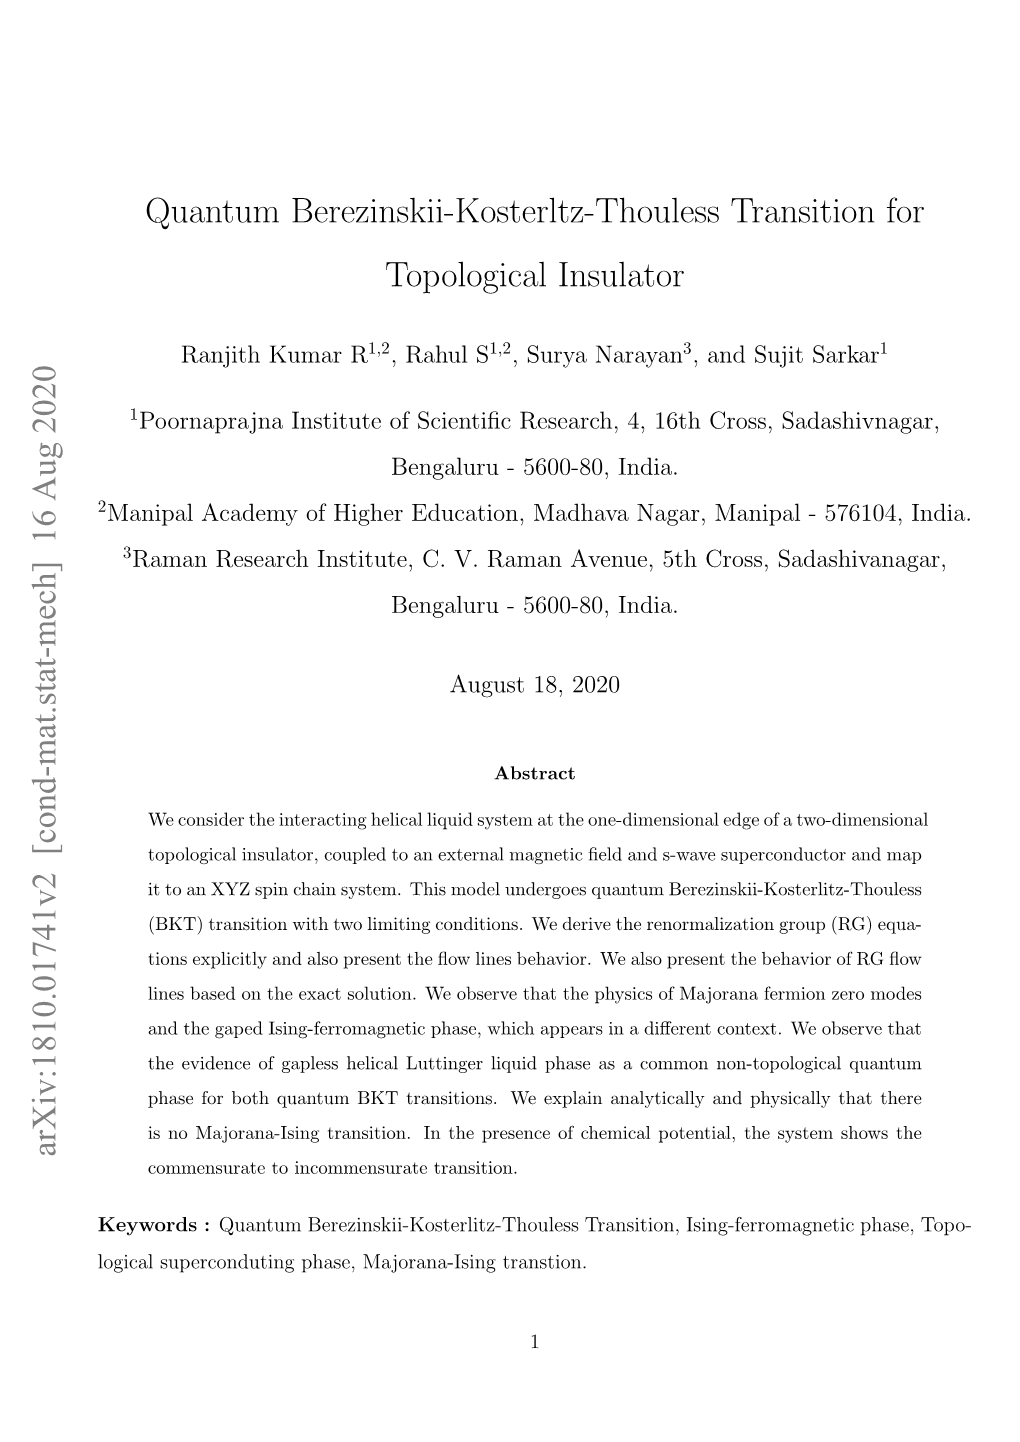 Quantum Berezinskii-Kosterltz-Thouless Transition for Topological Insulator